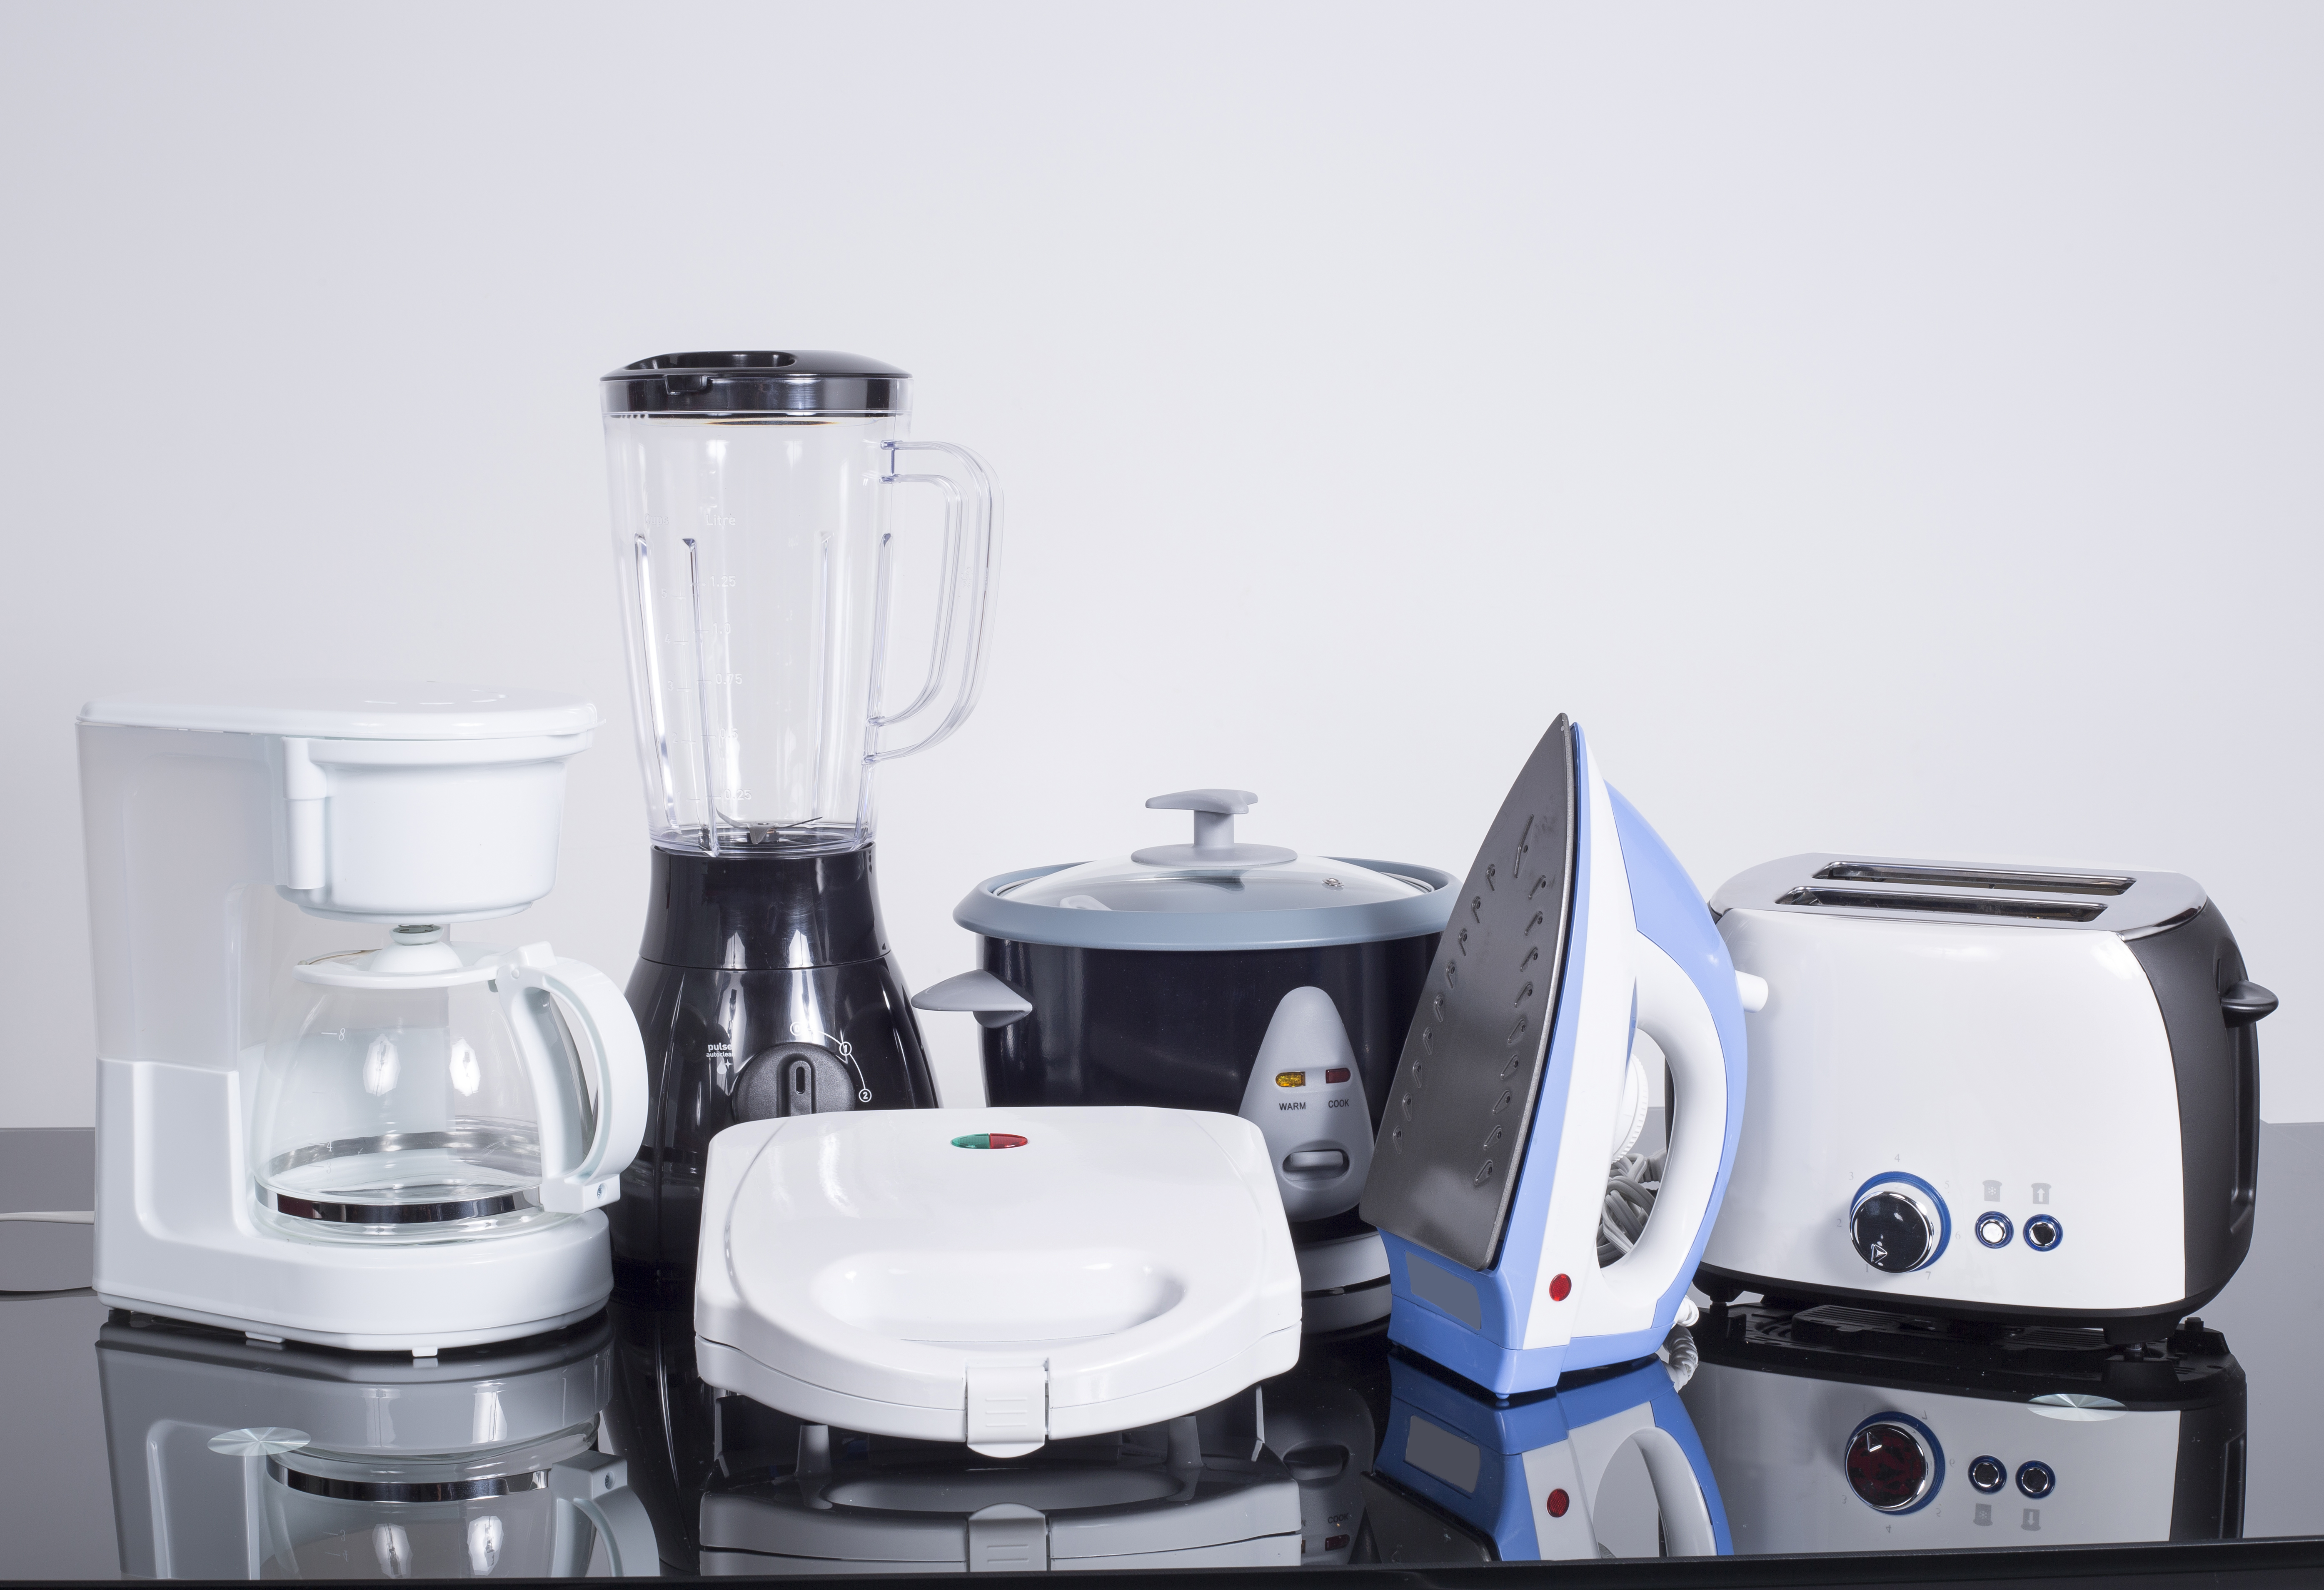 Coffee machine, toaster, blender, iron